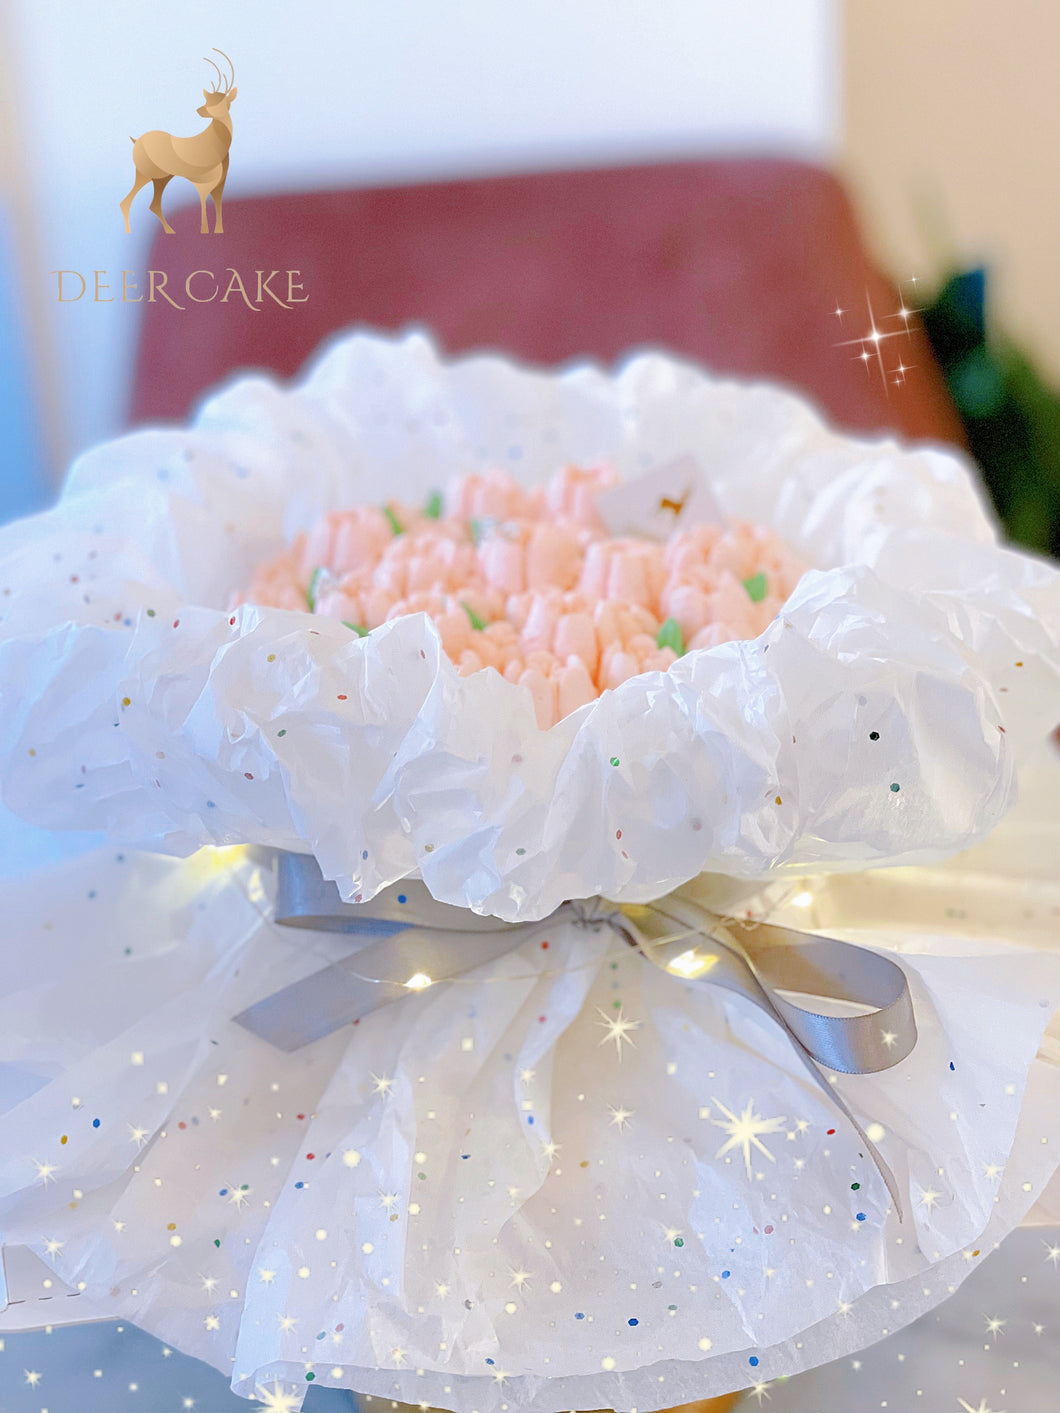 Bouquet cake- white